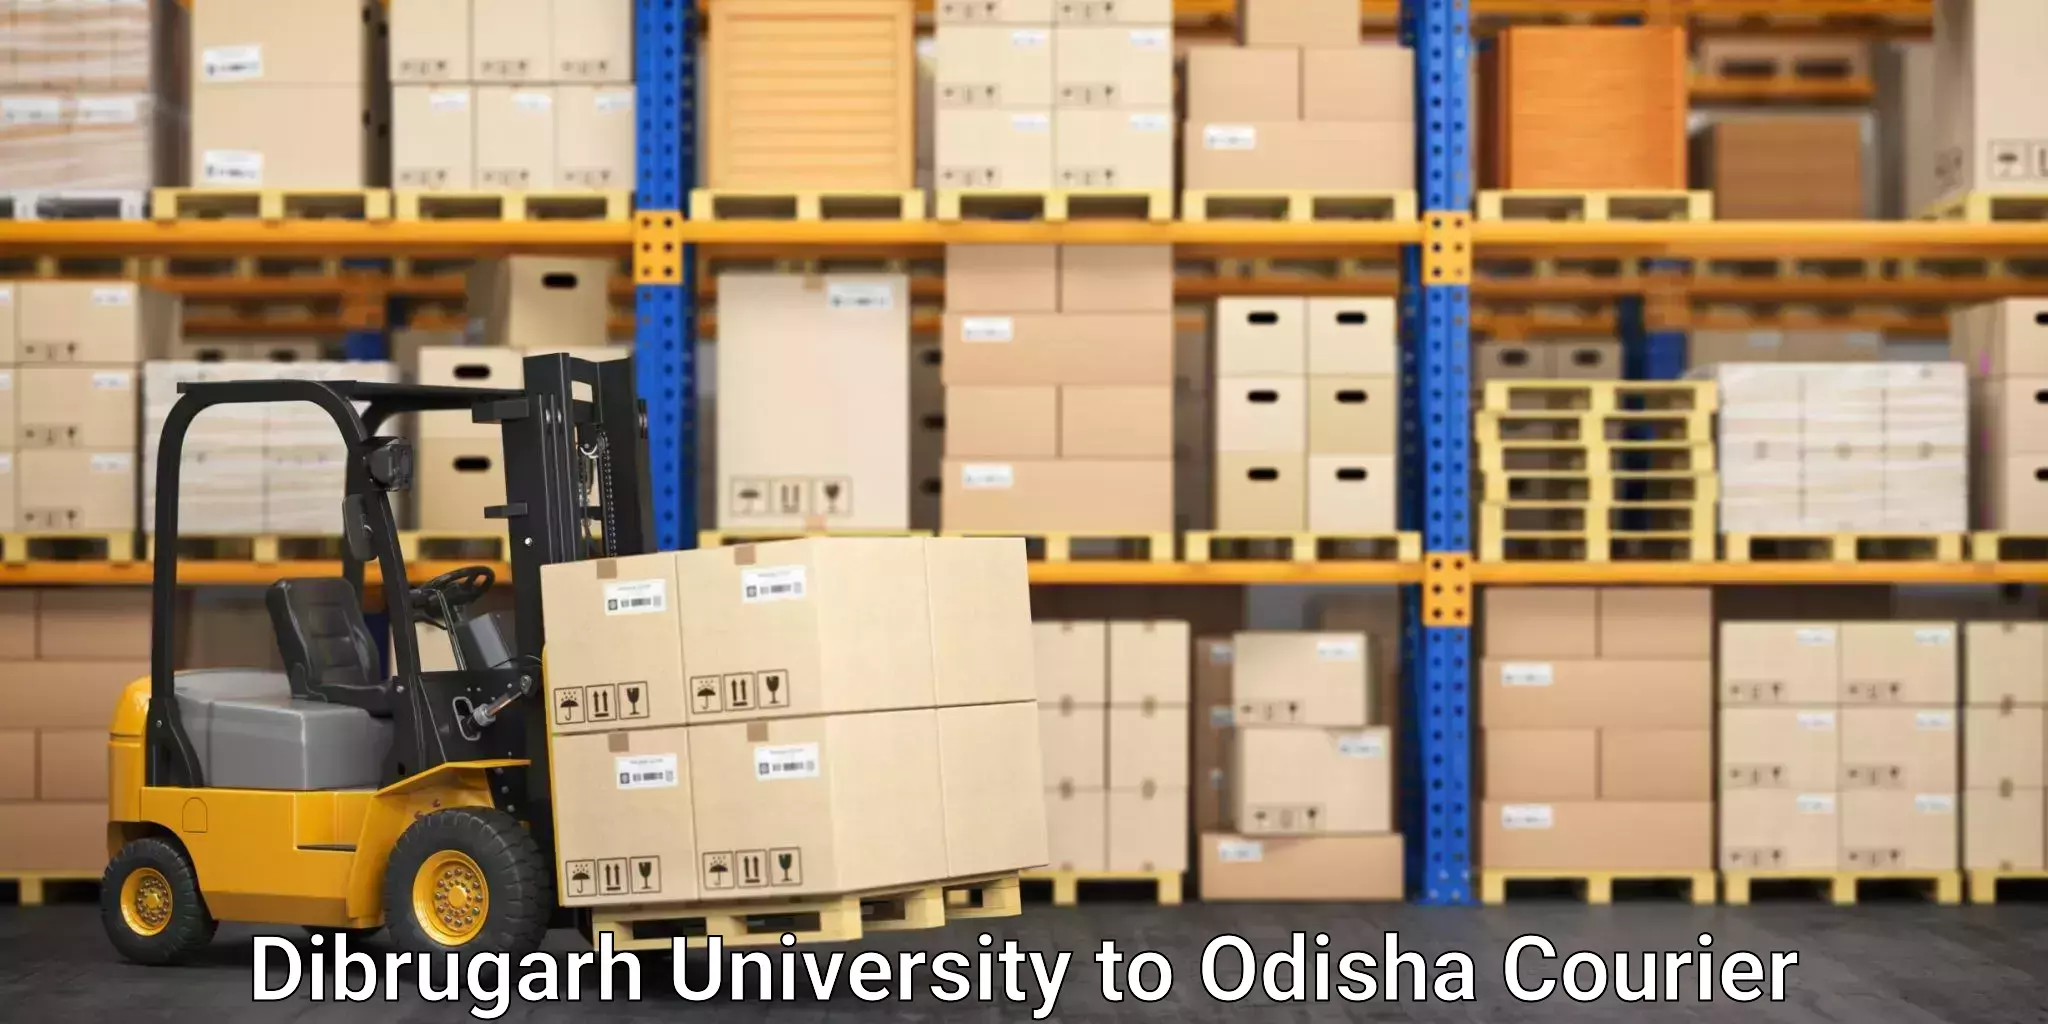 Easy return solutions Dibrugarh University to Bonth